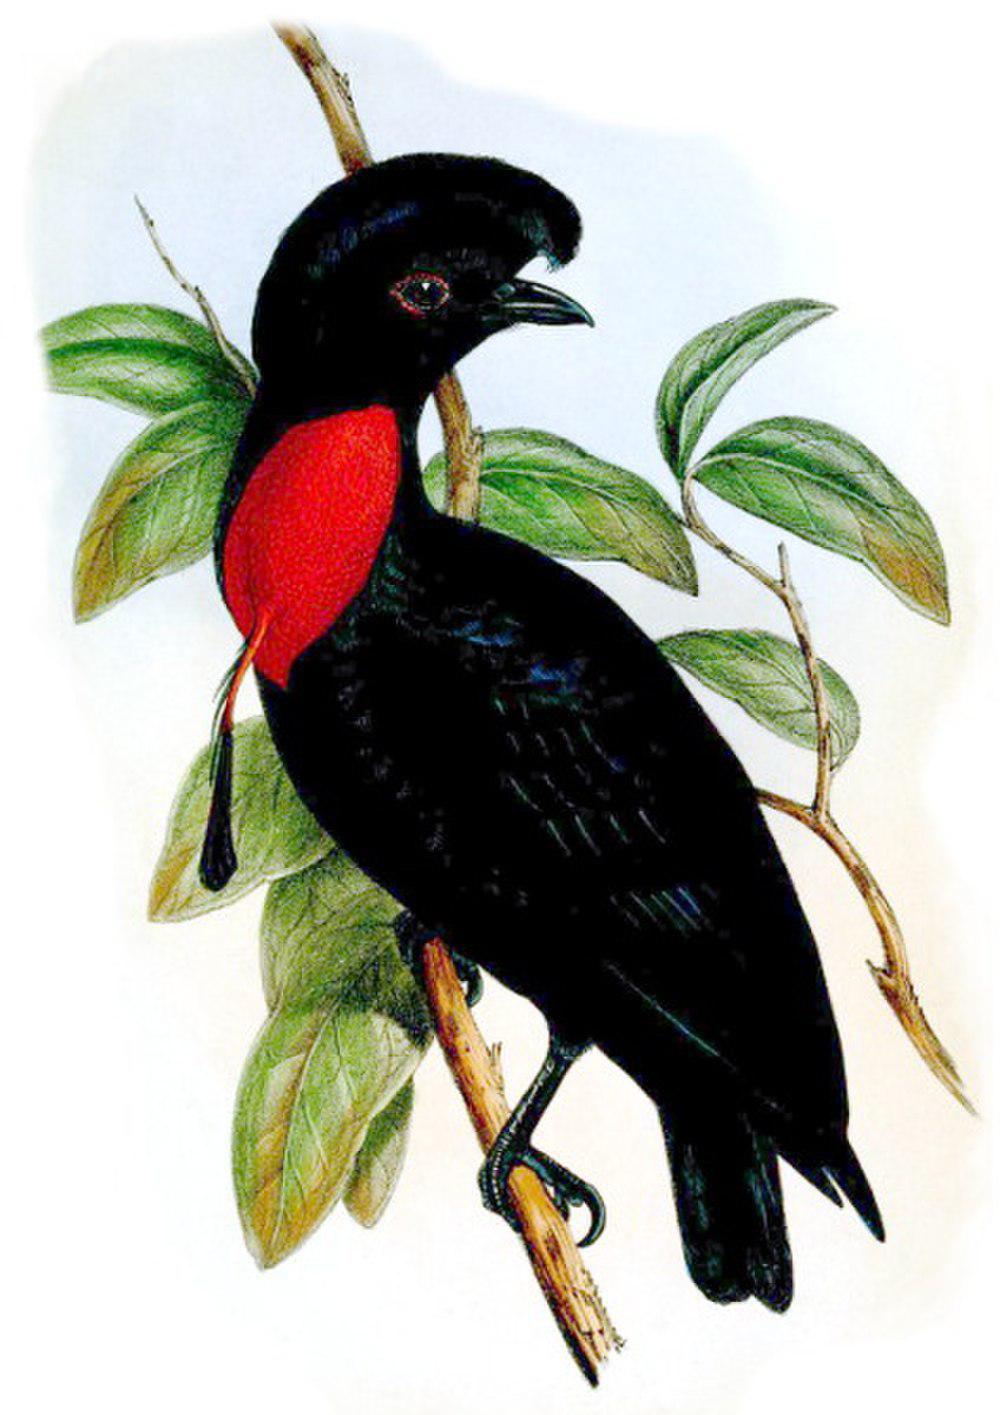 裸颈伞鸟 / Bare-necked Umbrellabird / Cephalopterus glabricollis